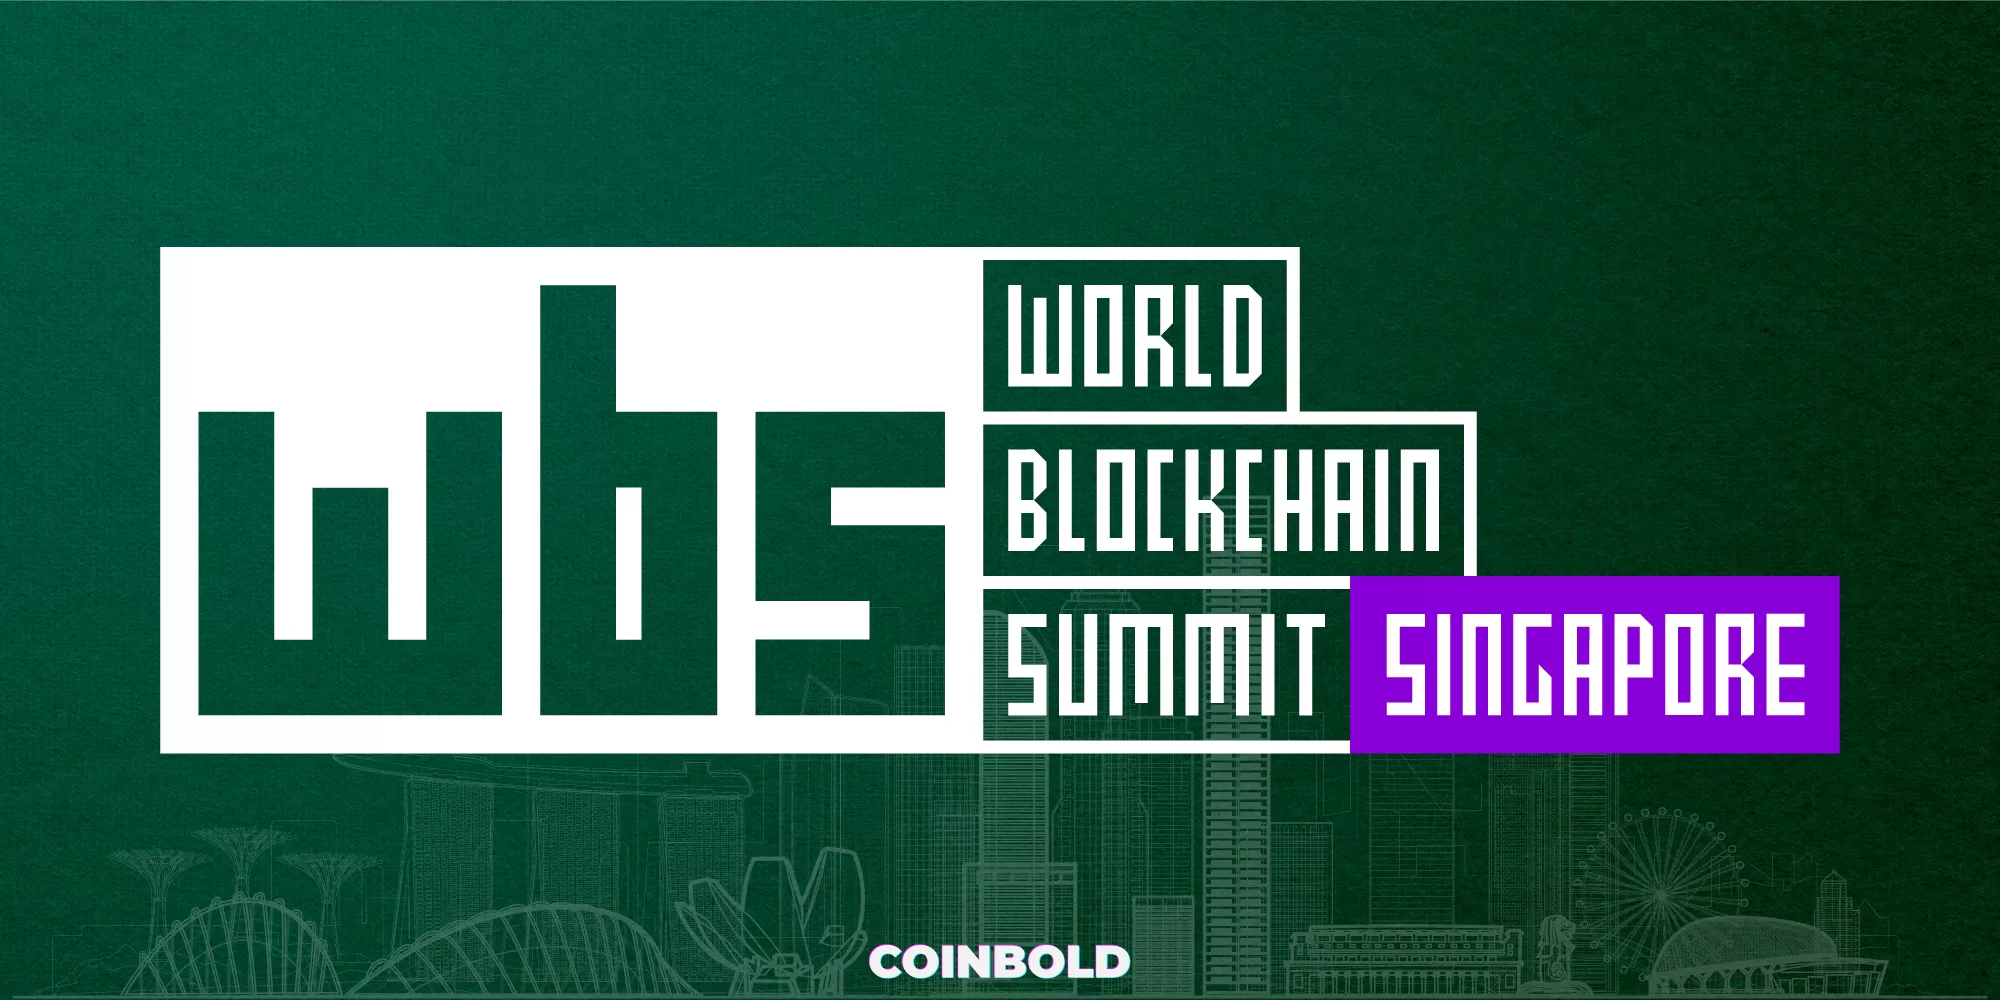 World blockchain Summit Singapore 2023